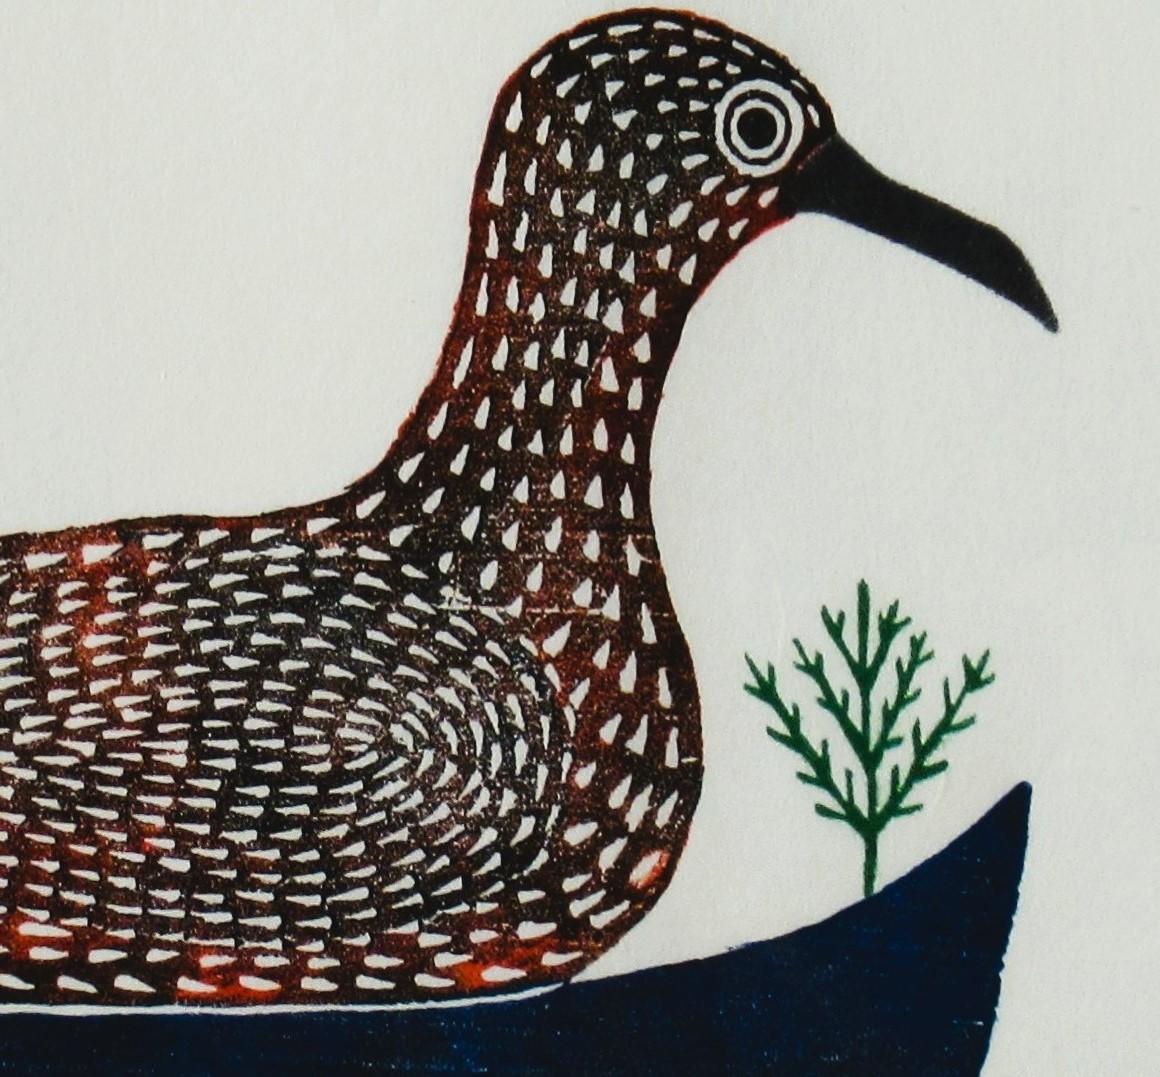 Giant Bird in a Canoe - Tribal Print by Kingmeata Etidloie